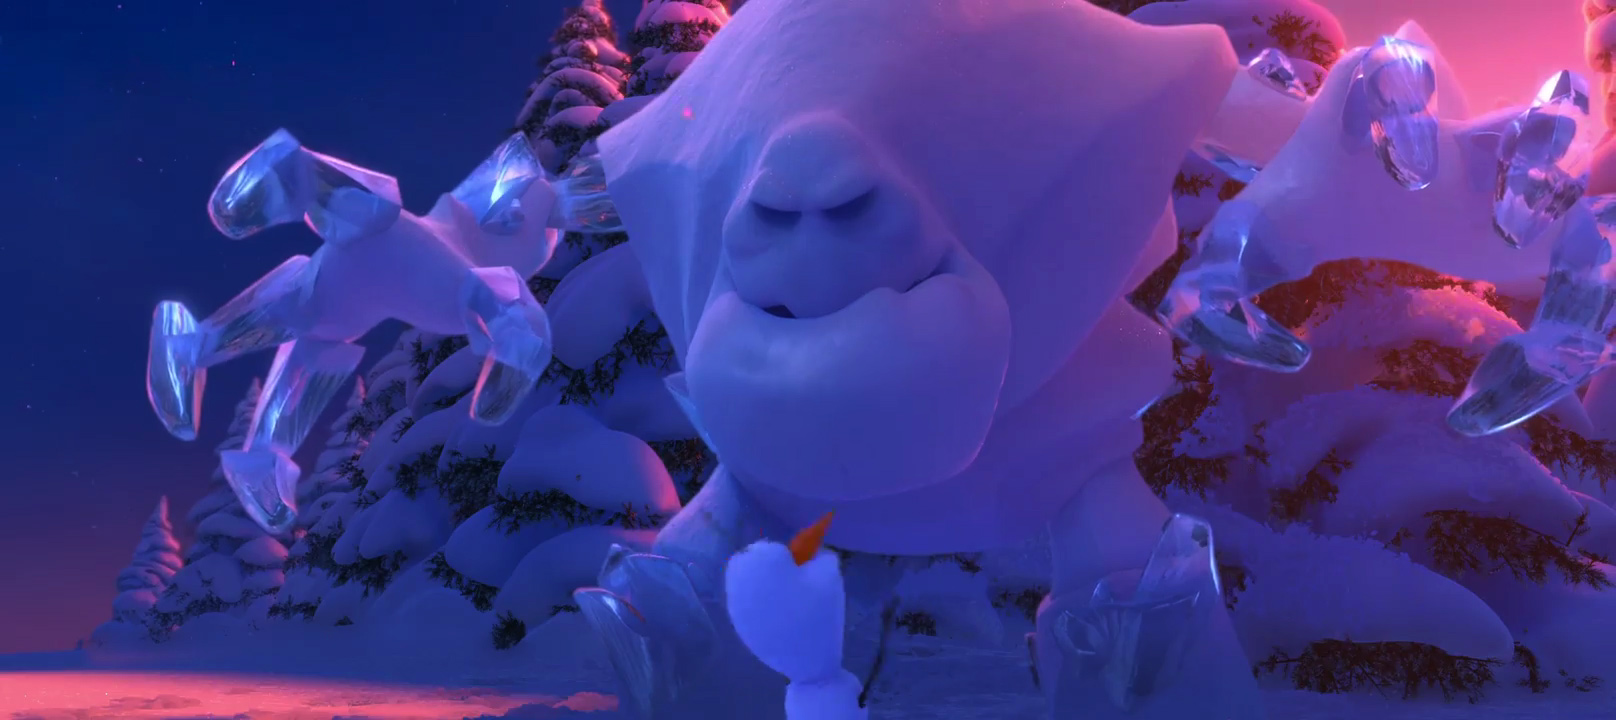 Frozen abominable snowman